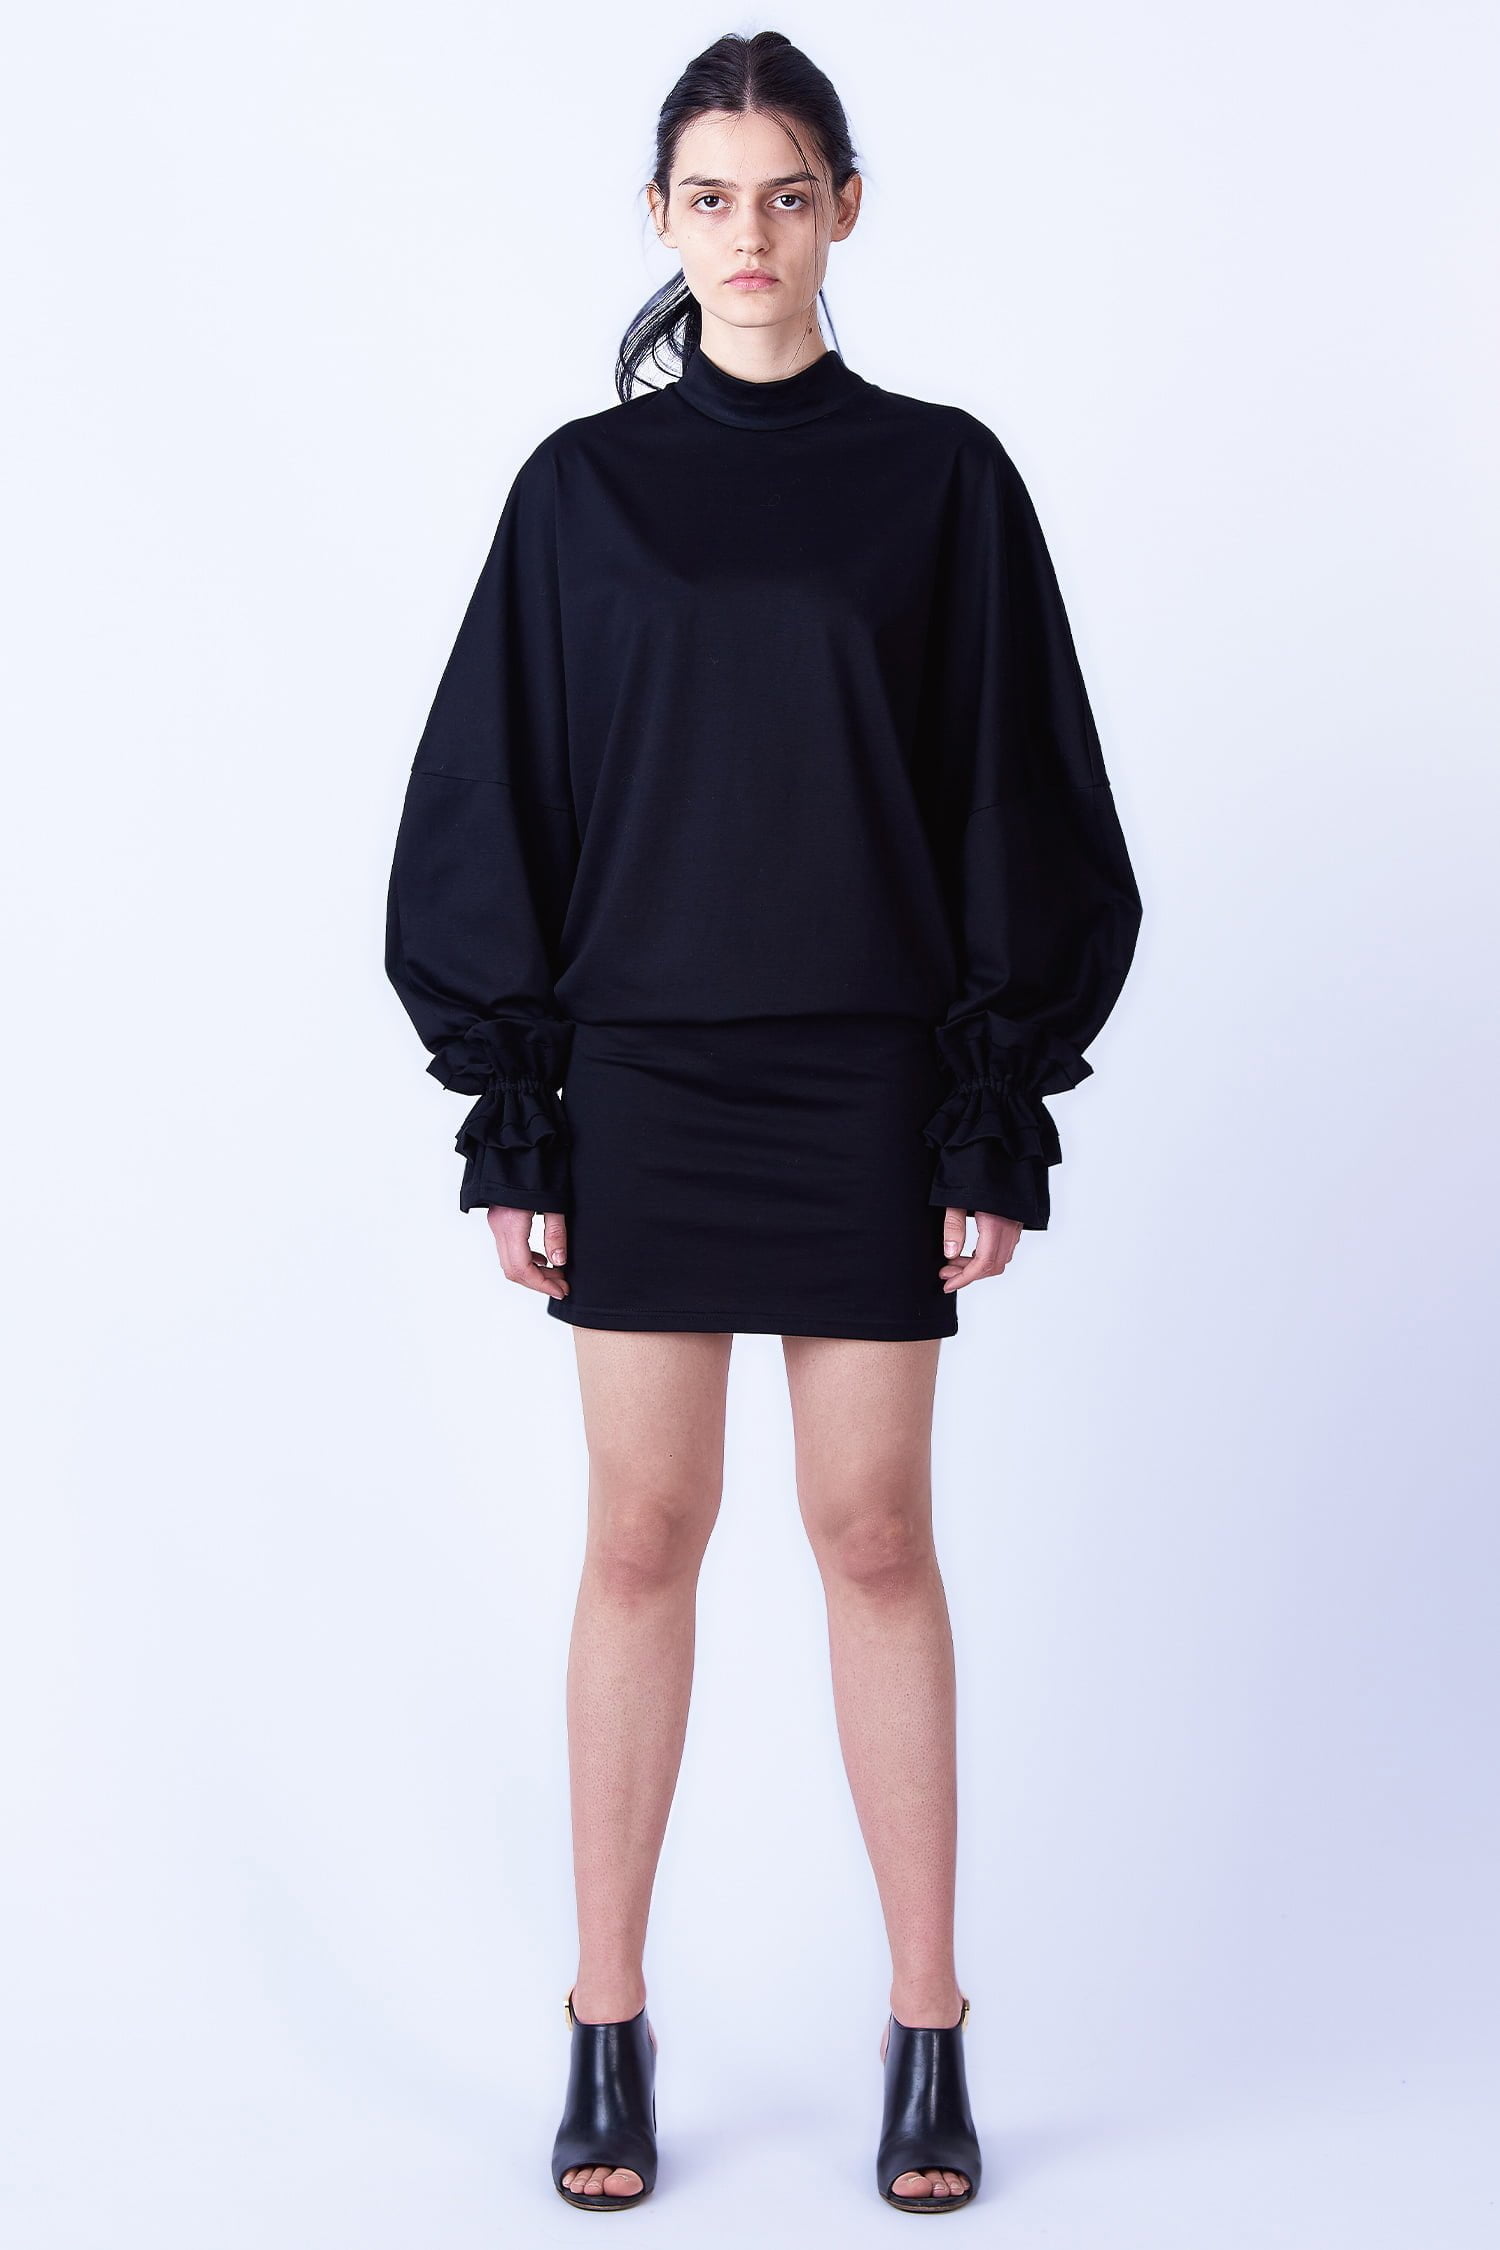 Acephala Ss2019 Black Cotton Jersey Dress Front